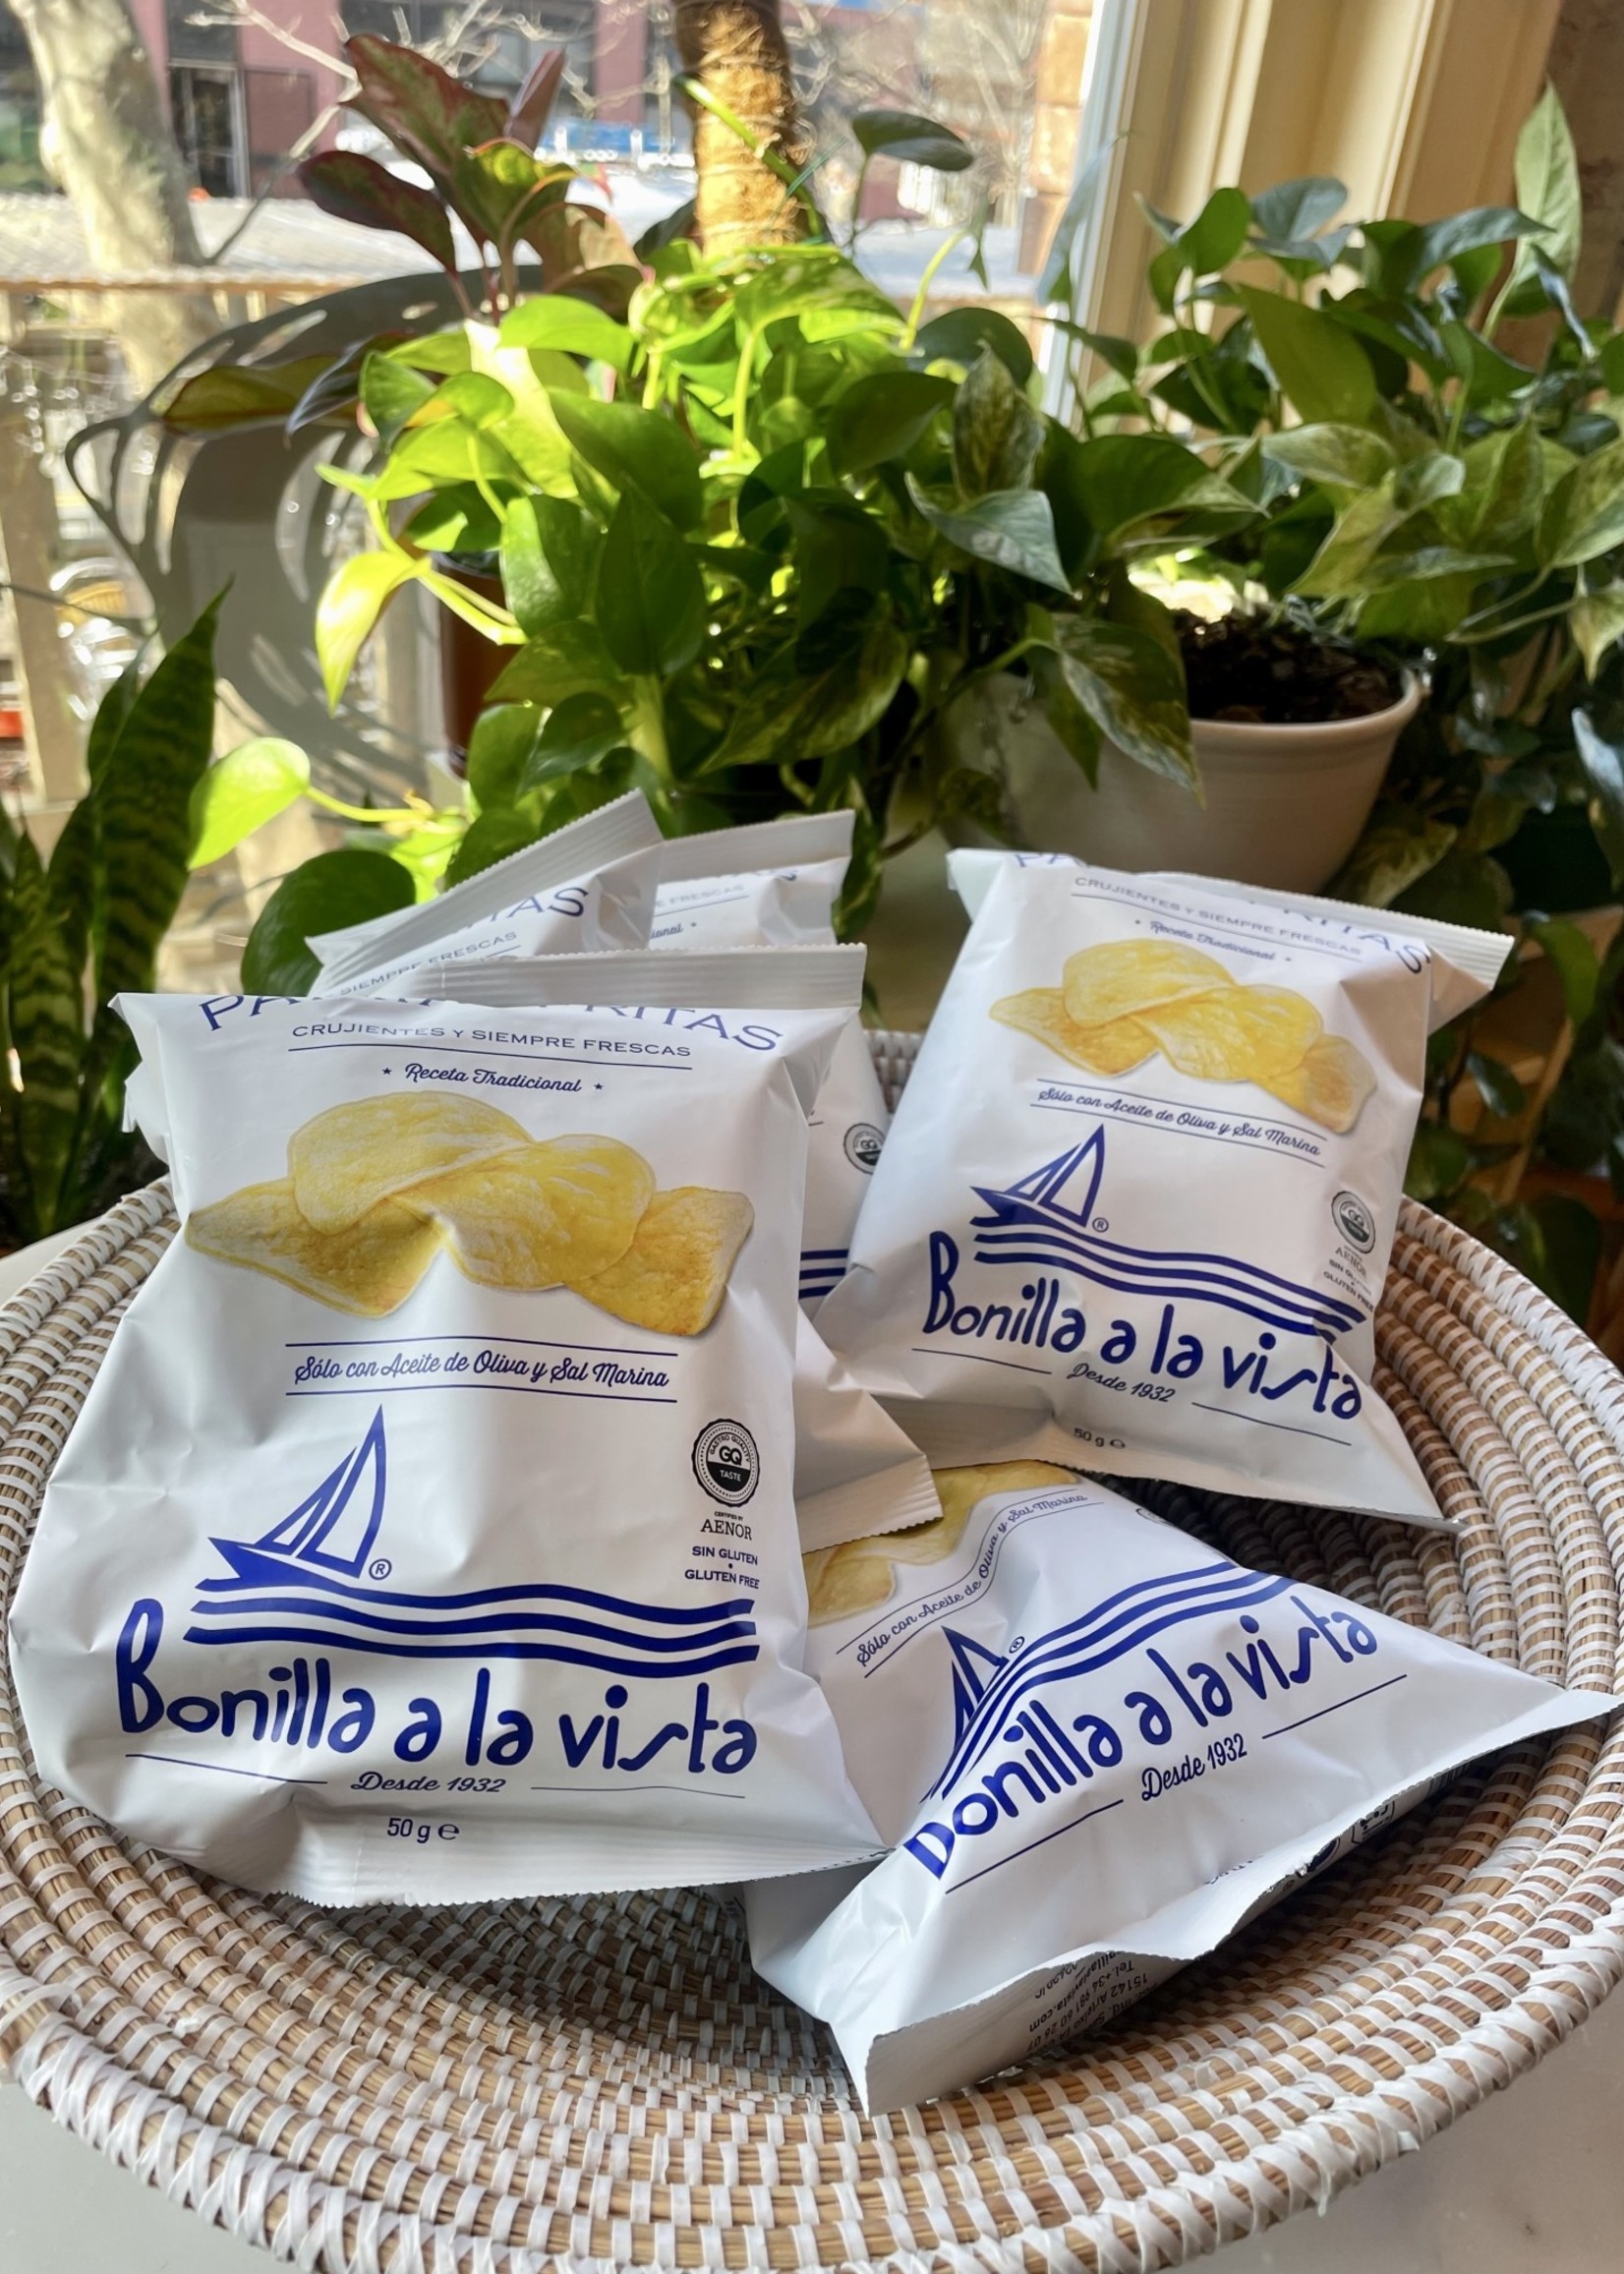 Bonilla a La Vista Potato Chips 50g